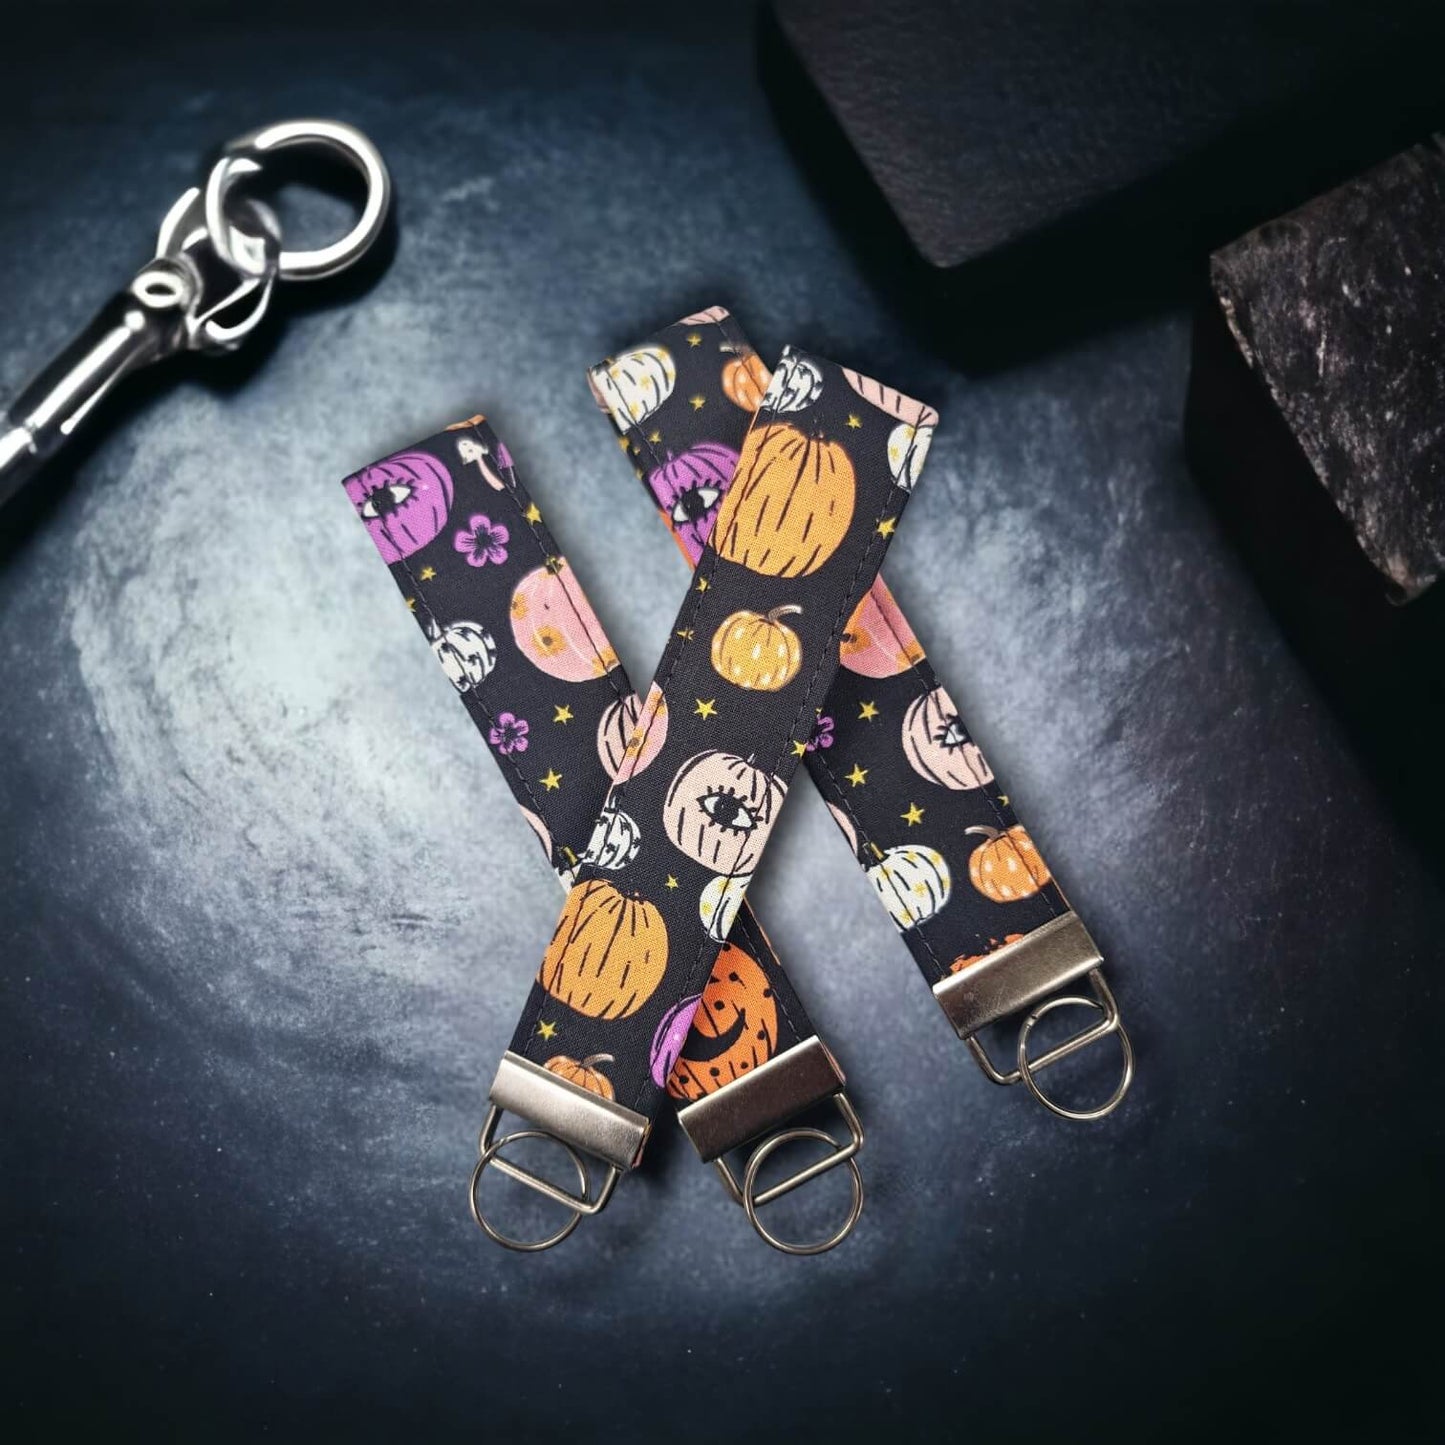 Our key wristlets/fobs in the pattern Purplexing Pumpkins.